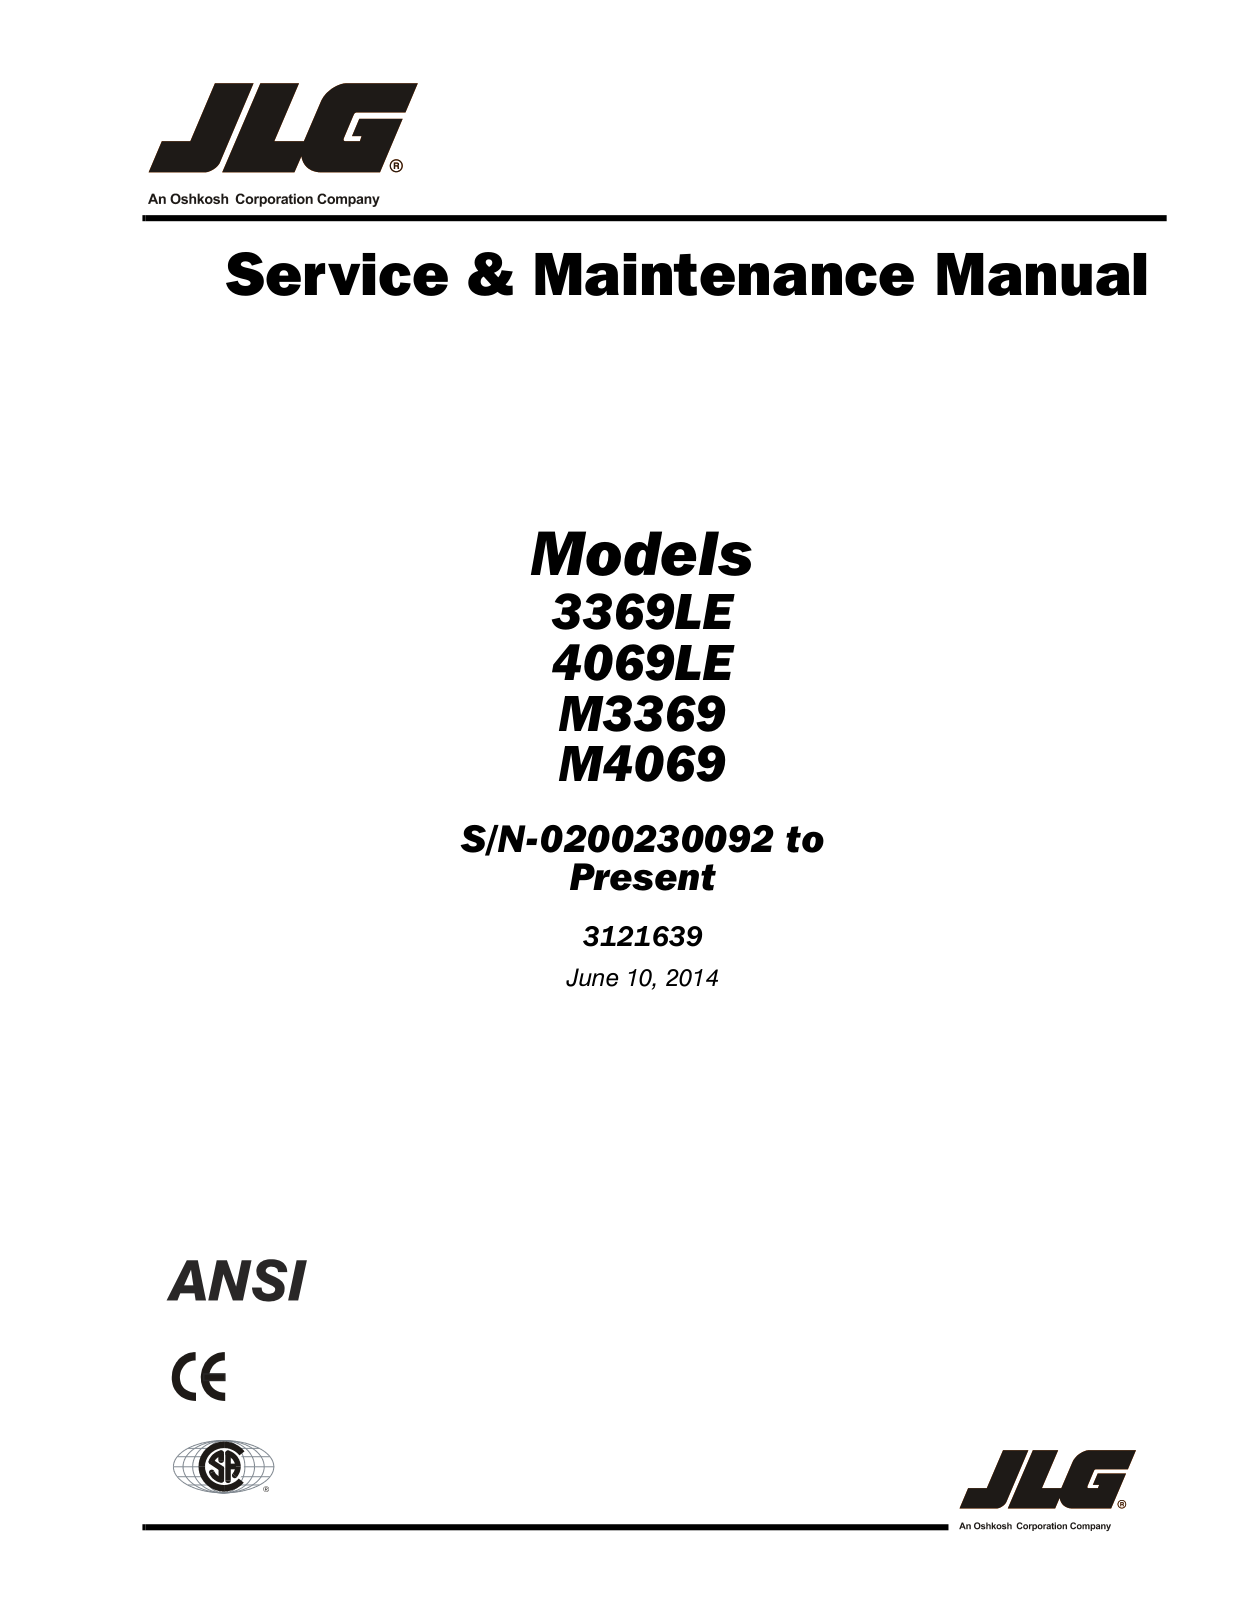 JLG M4069 Service Manual